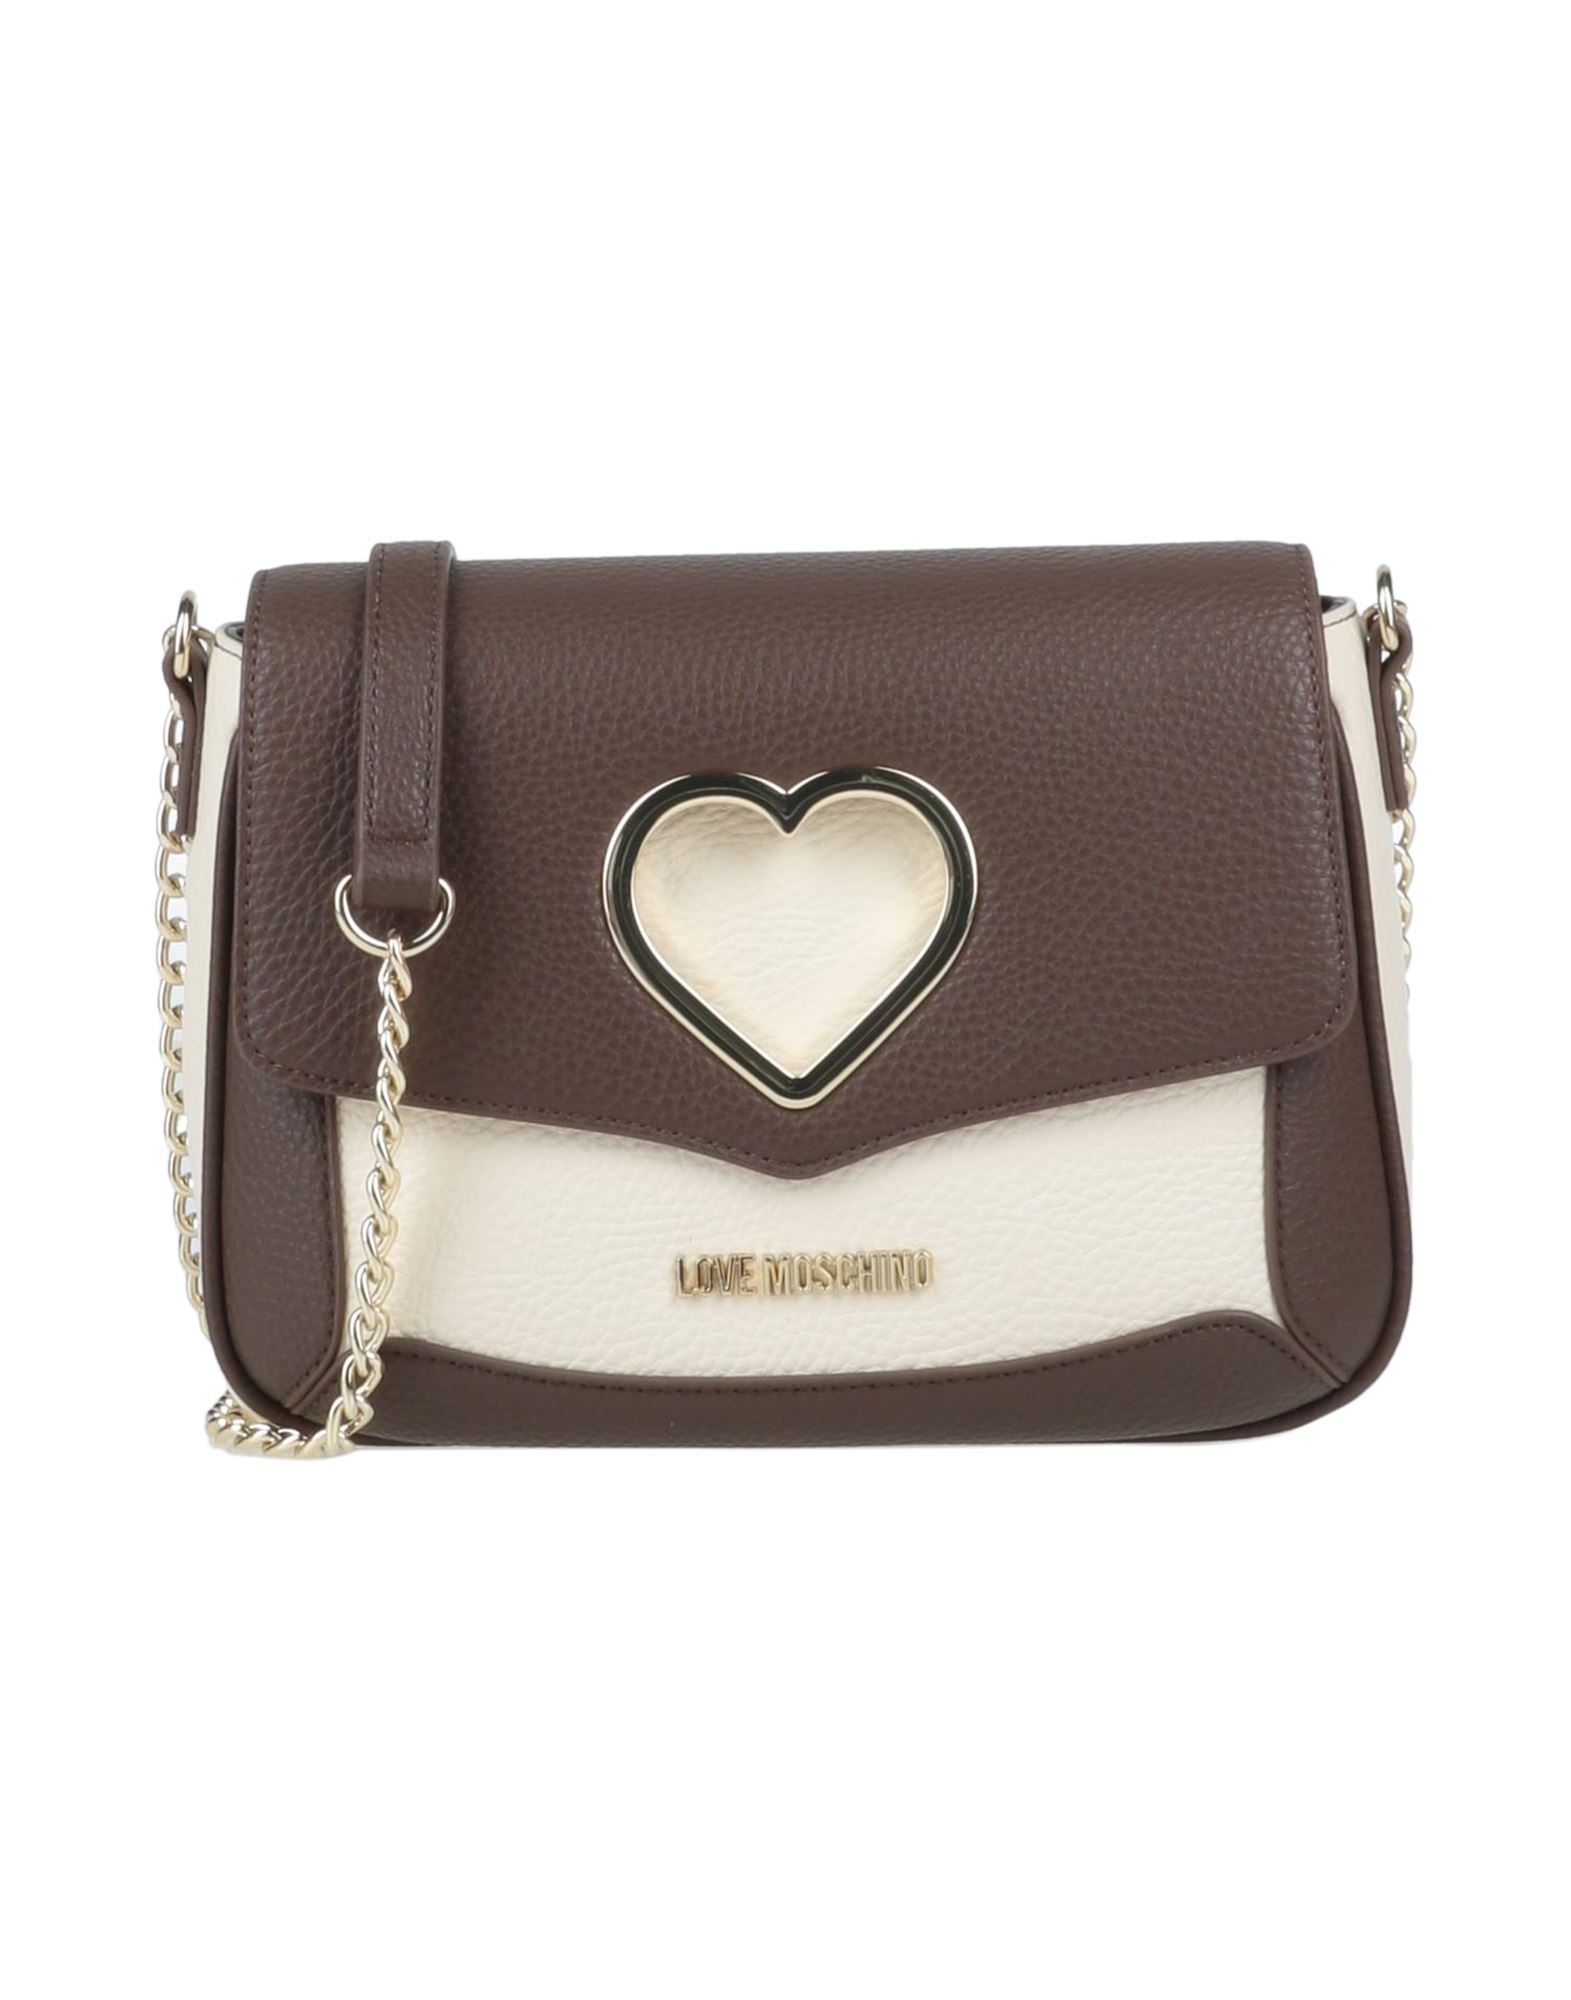 LOVE MOSCHINO Handbags | Smart Closet